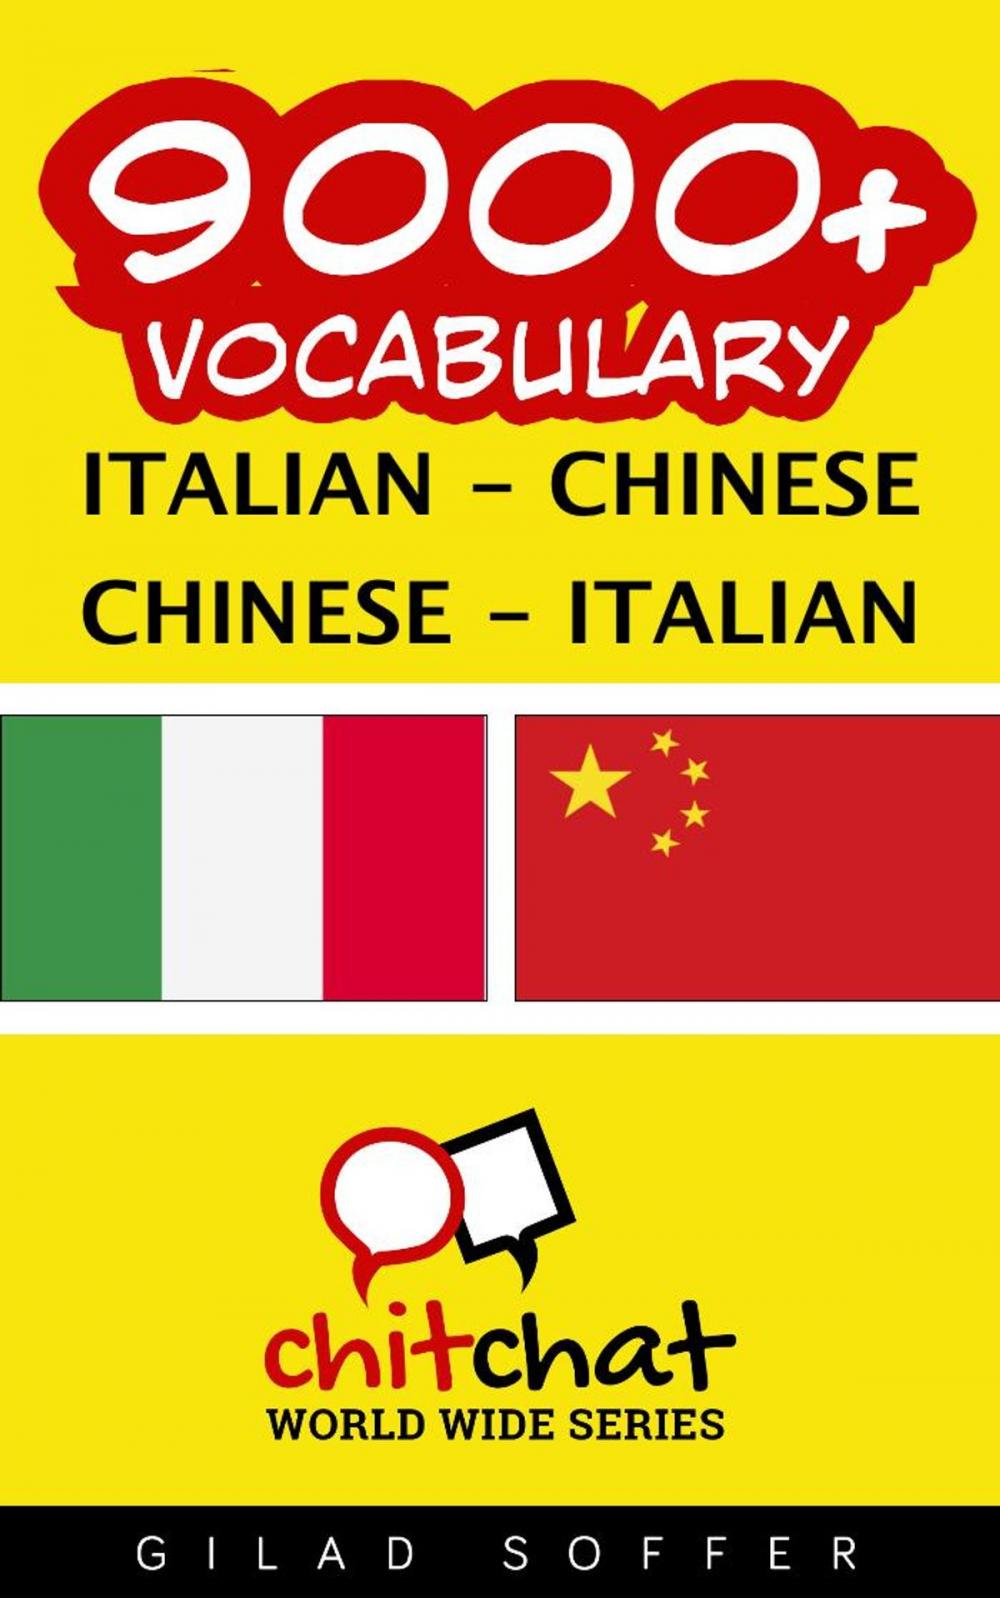 Big bigCover of 9000+ Vocabulary Italian - Chinese